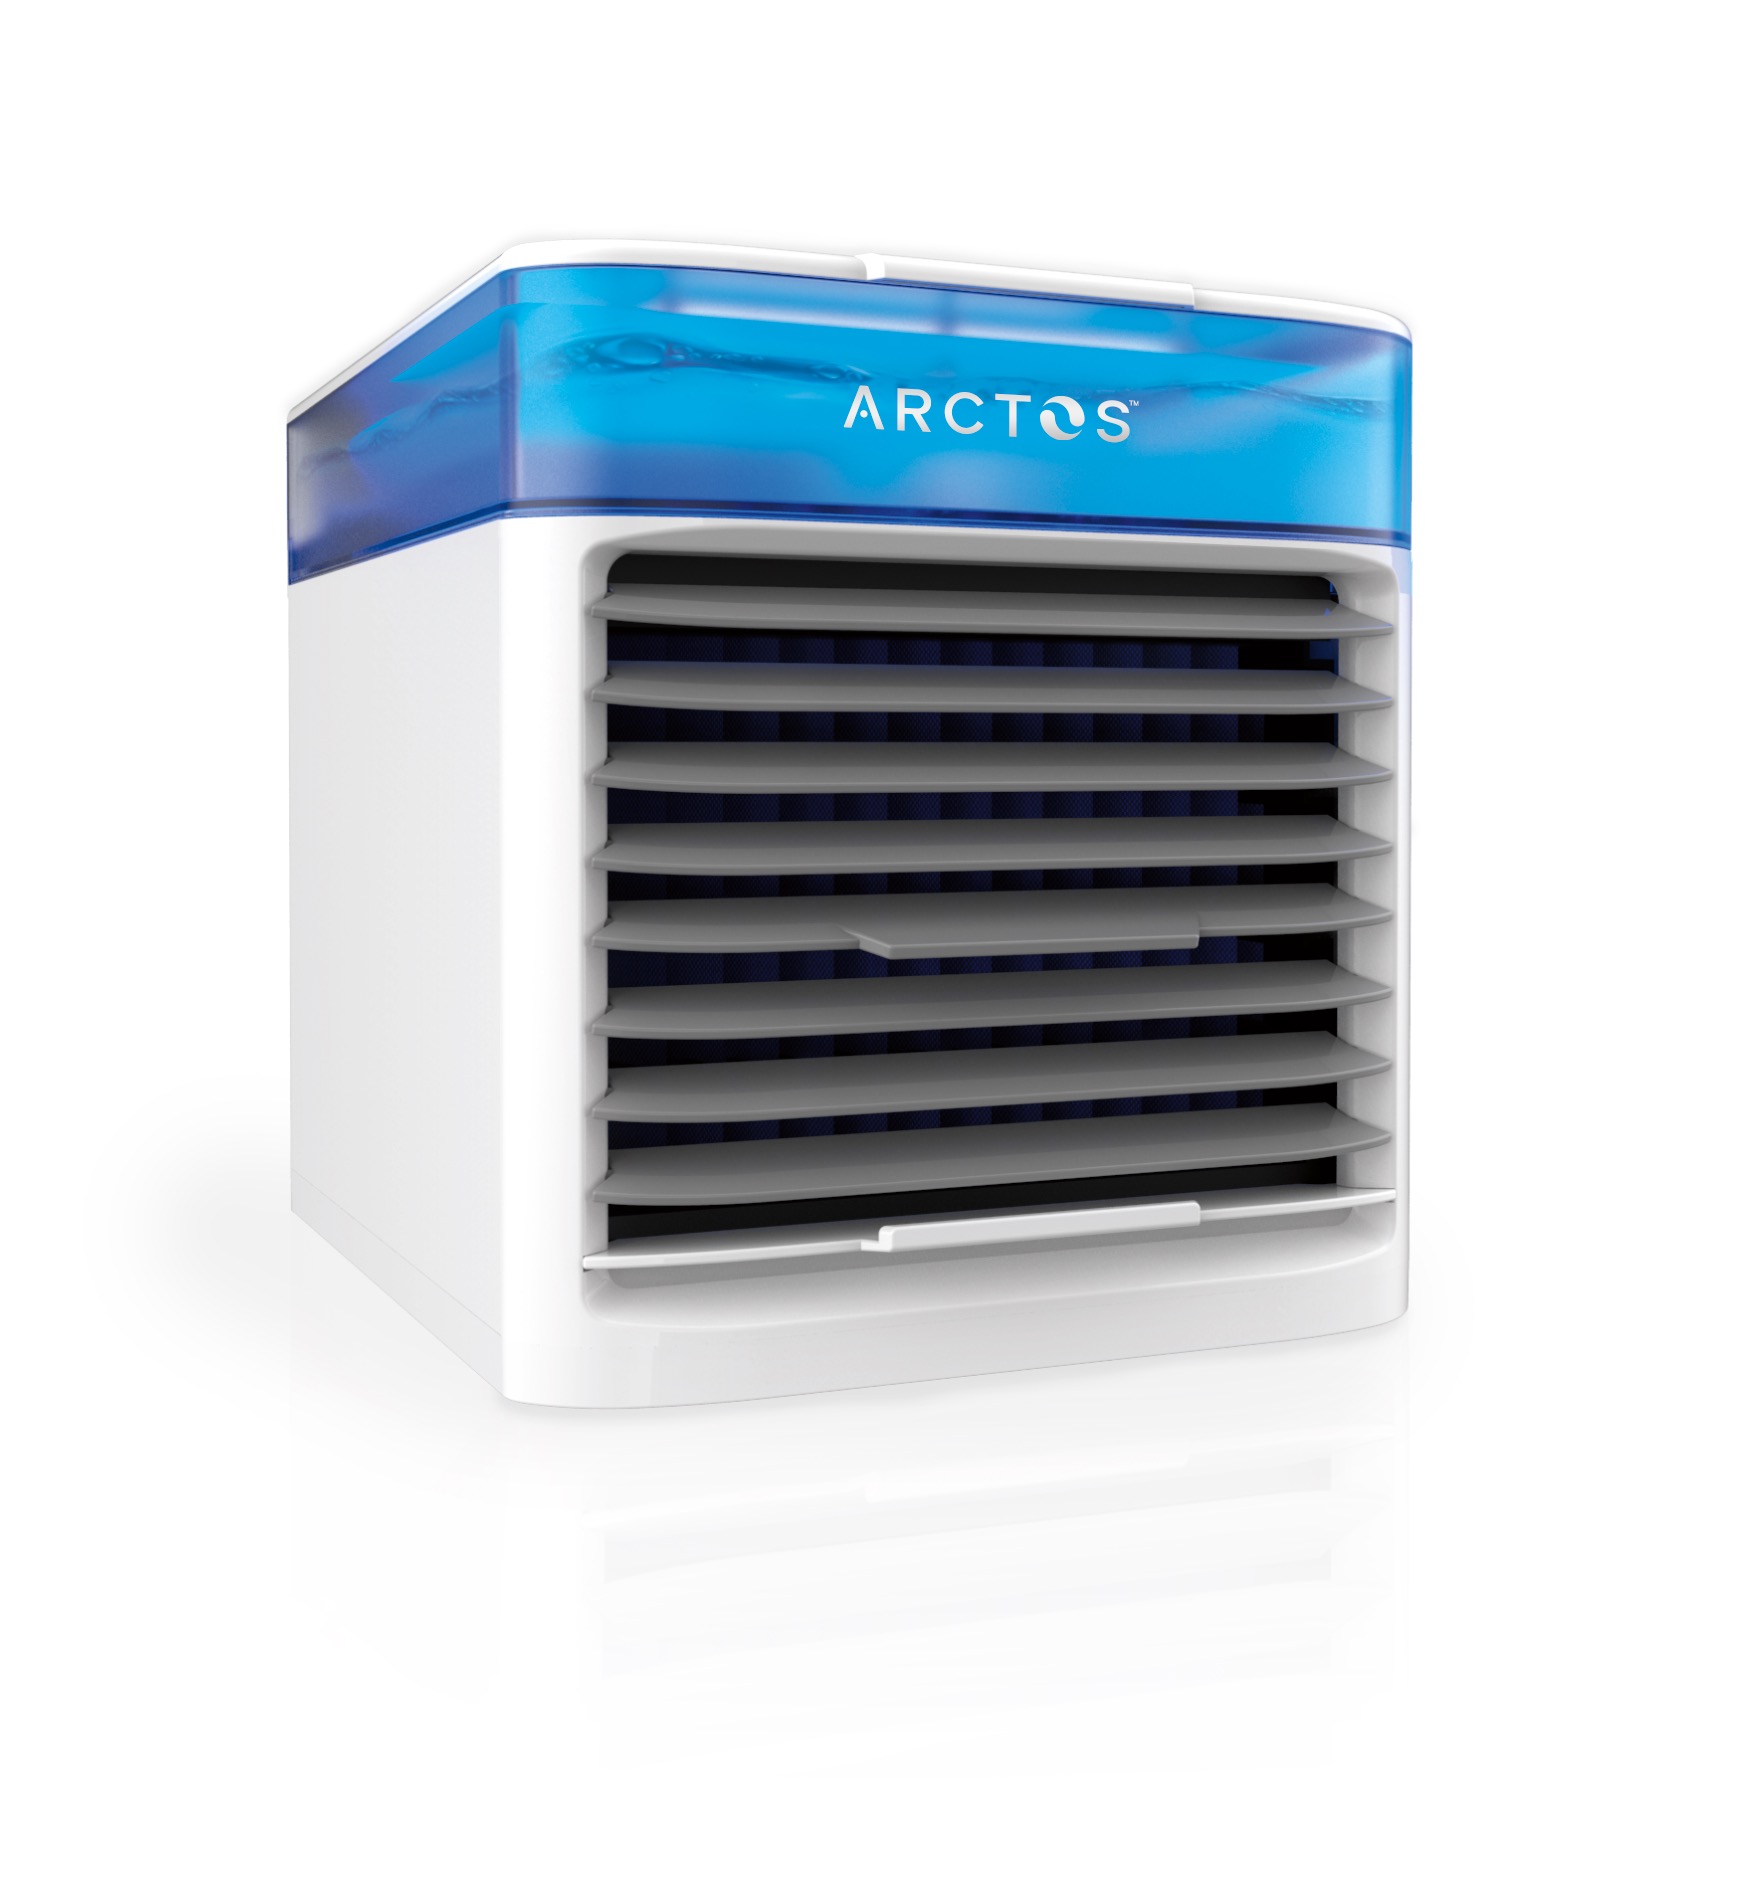 Arctos Mini Air Conditioner Reviews